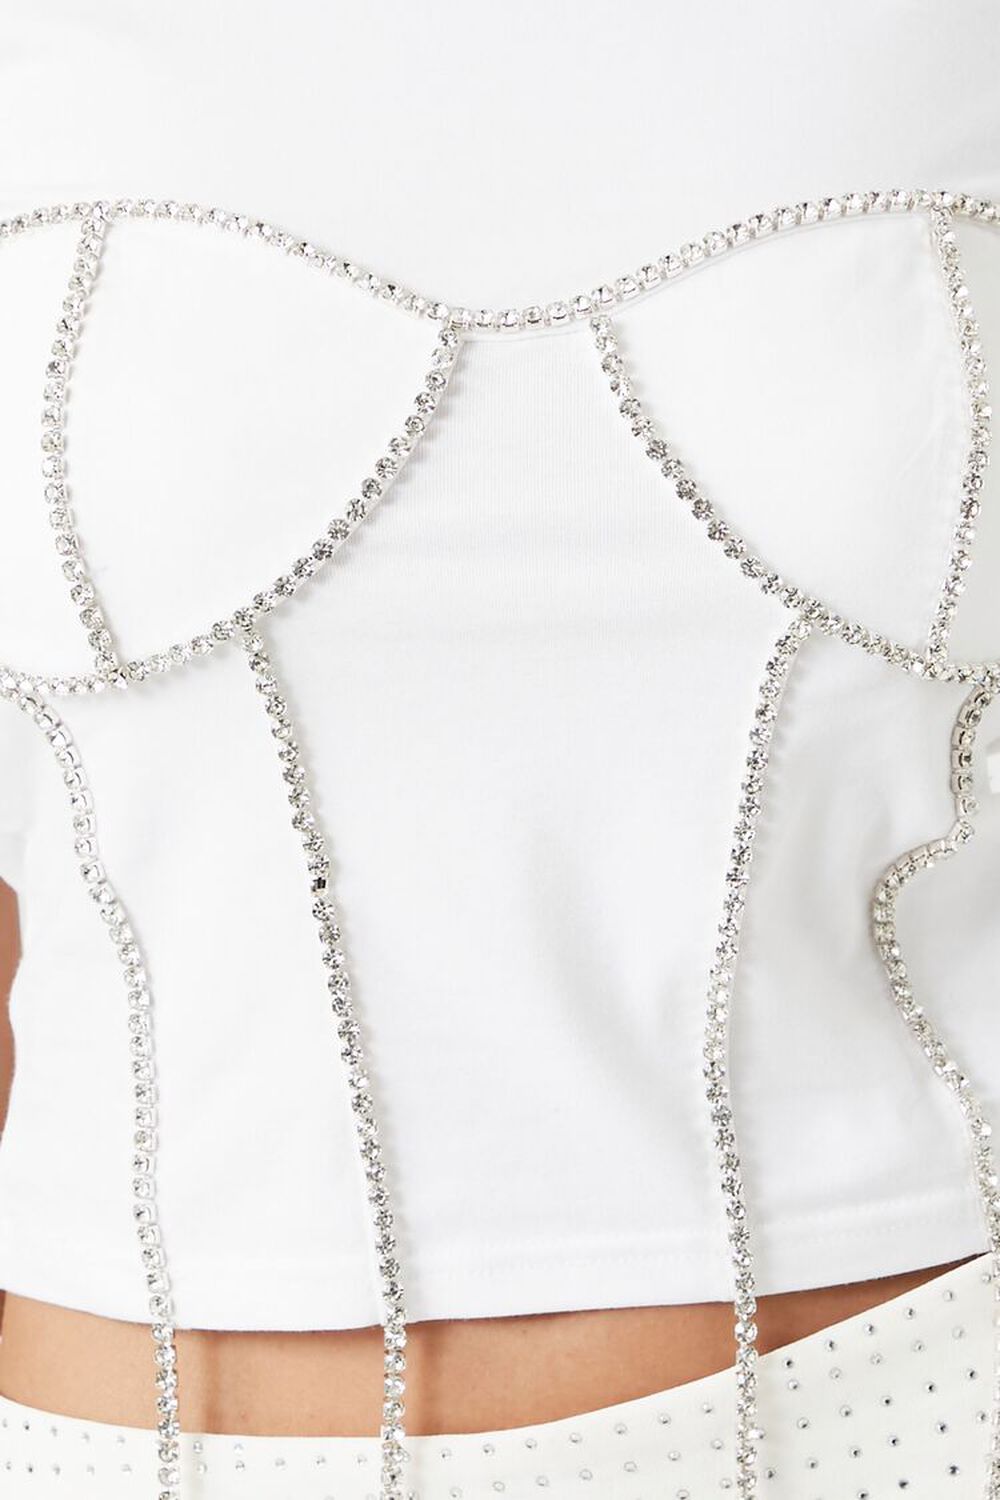 Diamond Embellished Crystal Rhinestone White Bustier Bralette